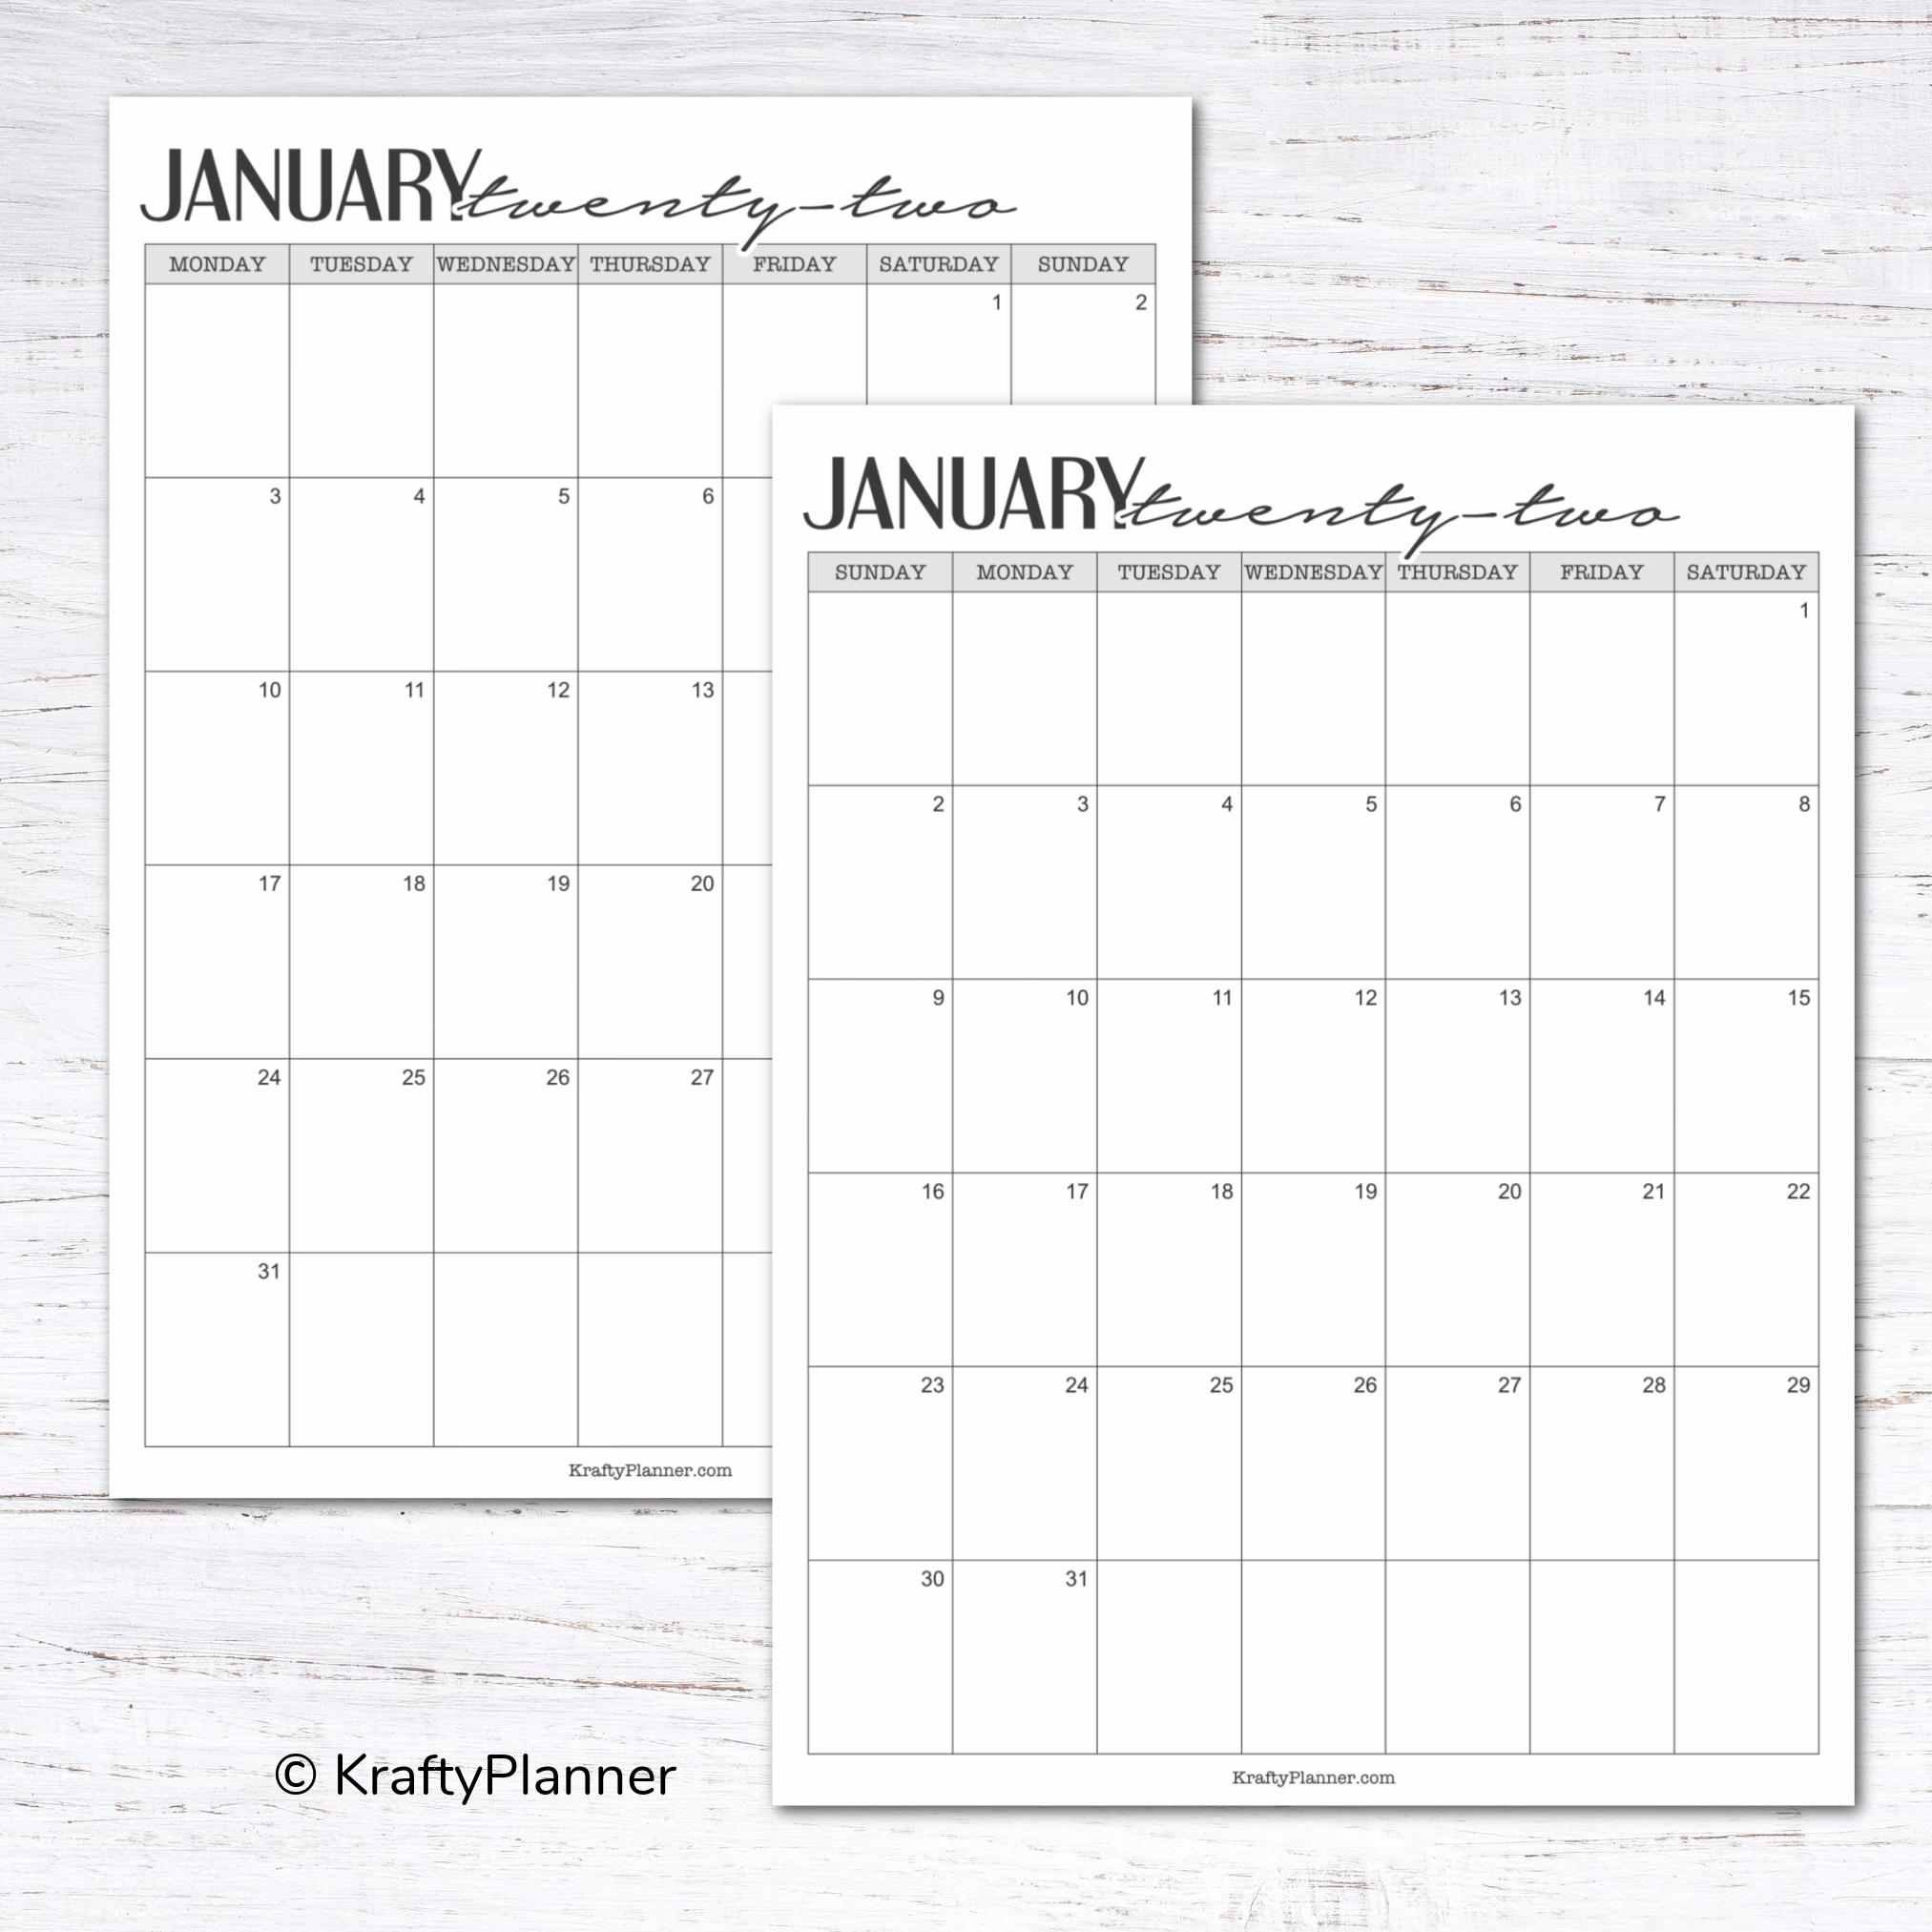 The Krafty Planner 2022 Calendar.png